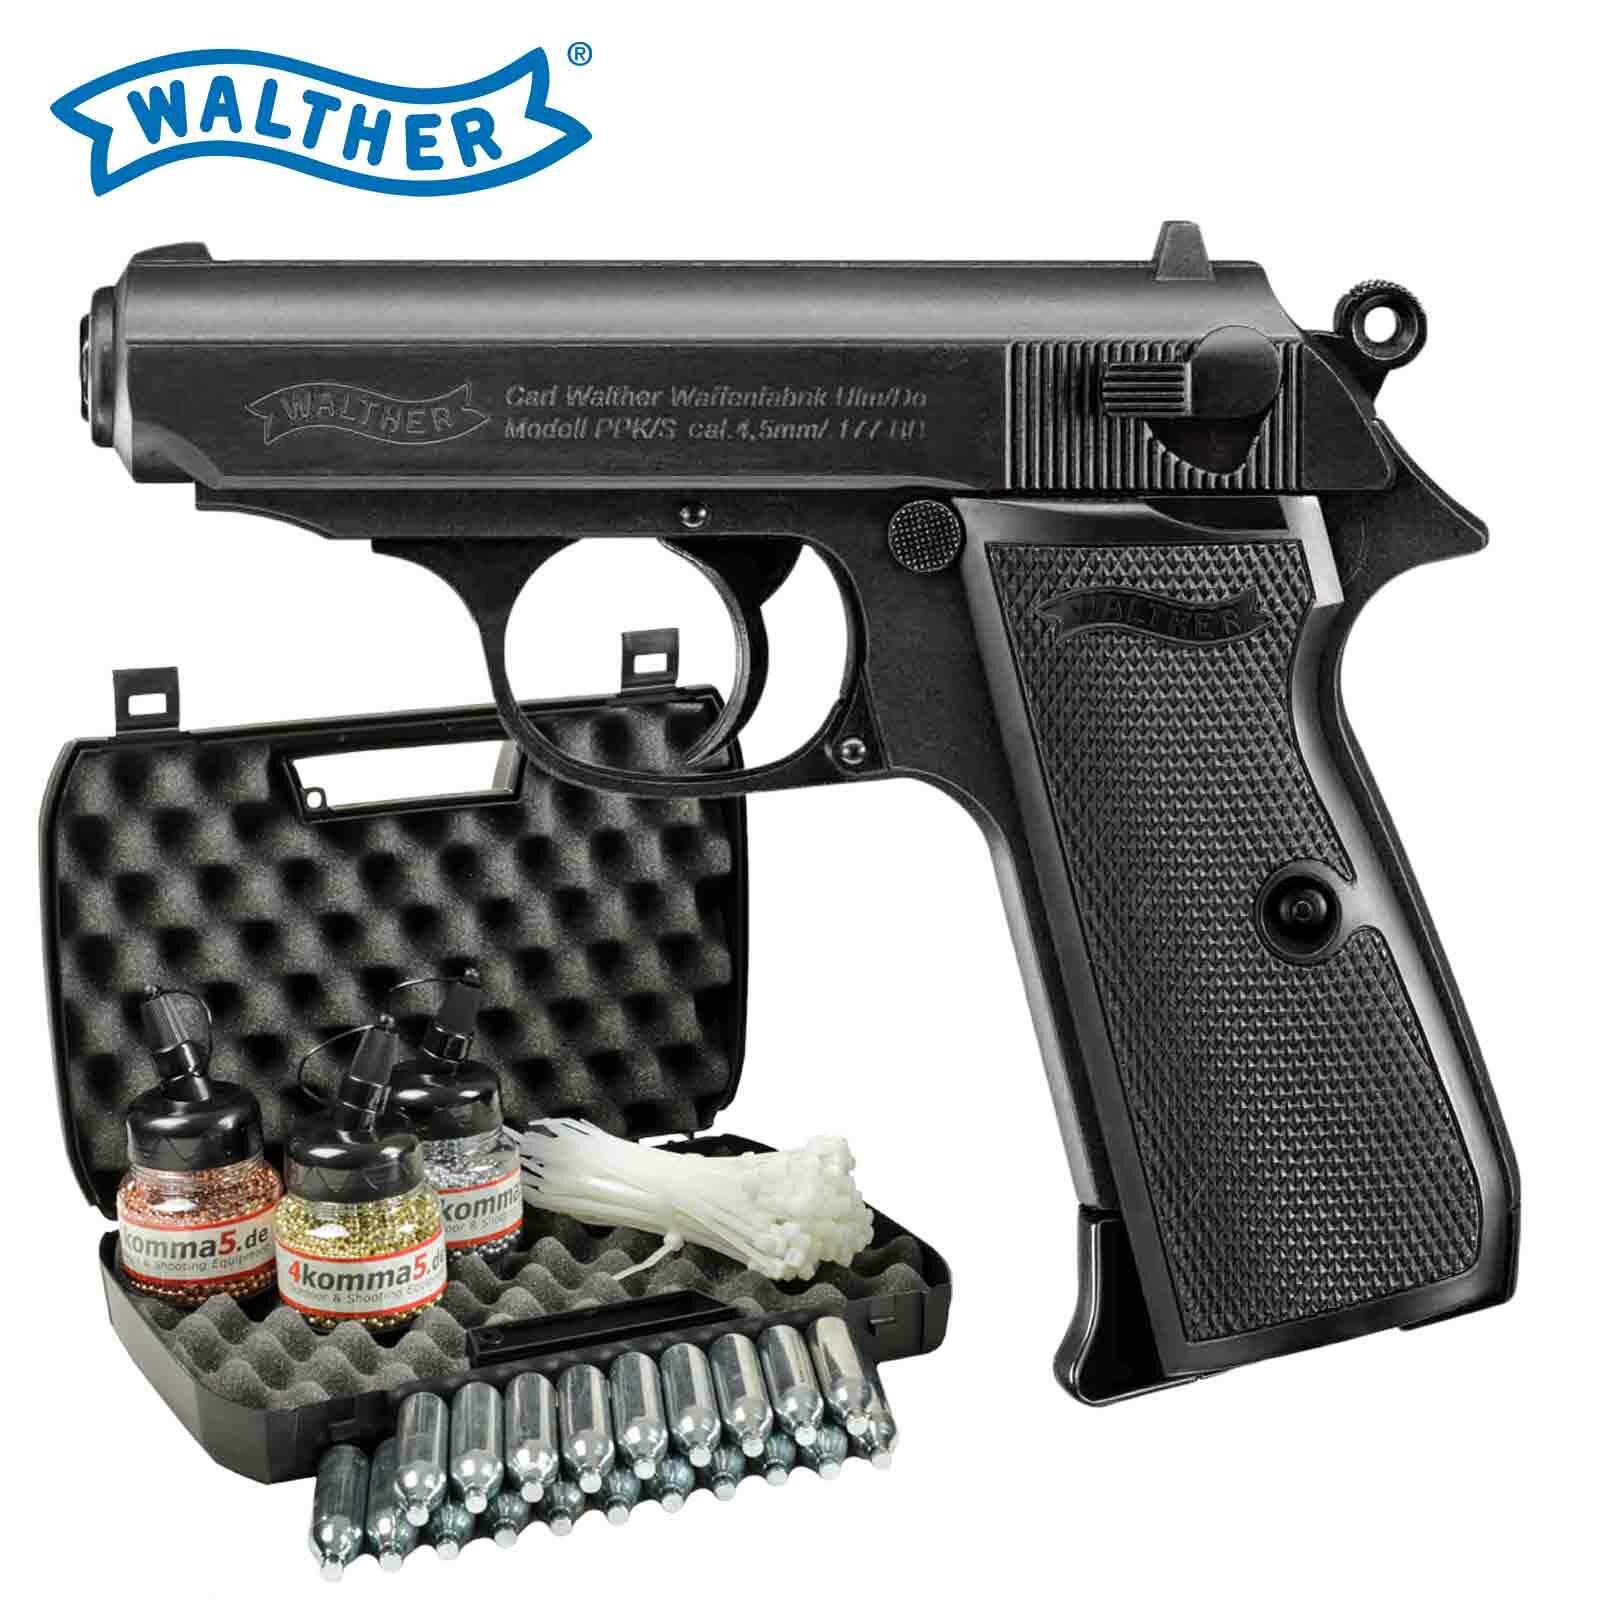 Pistola Umarex Walther PPK/S de CO2 , cal. 4,5 BB , Blowback